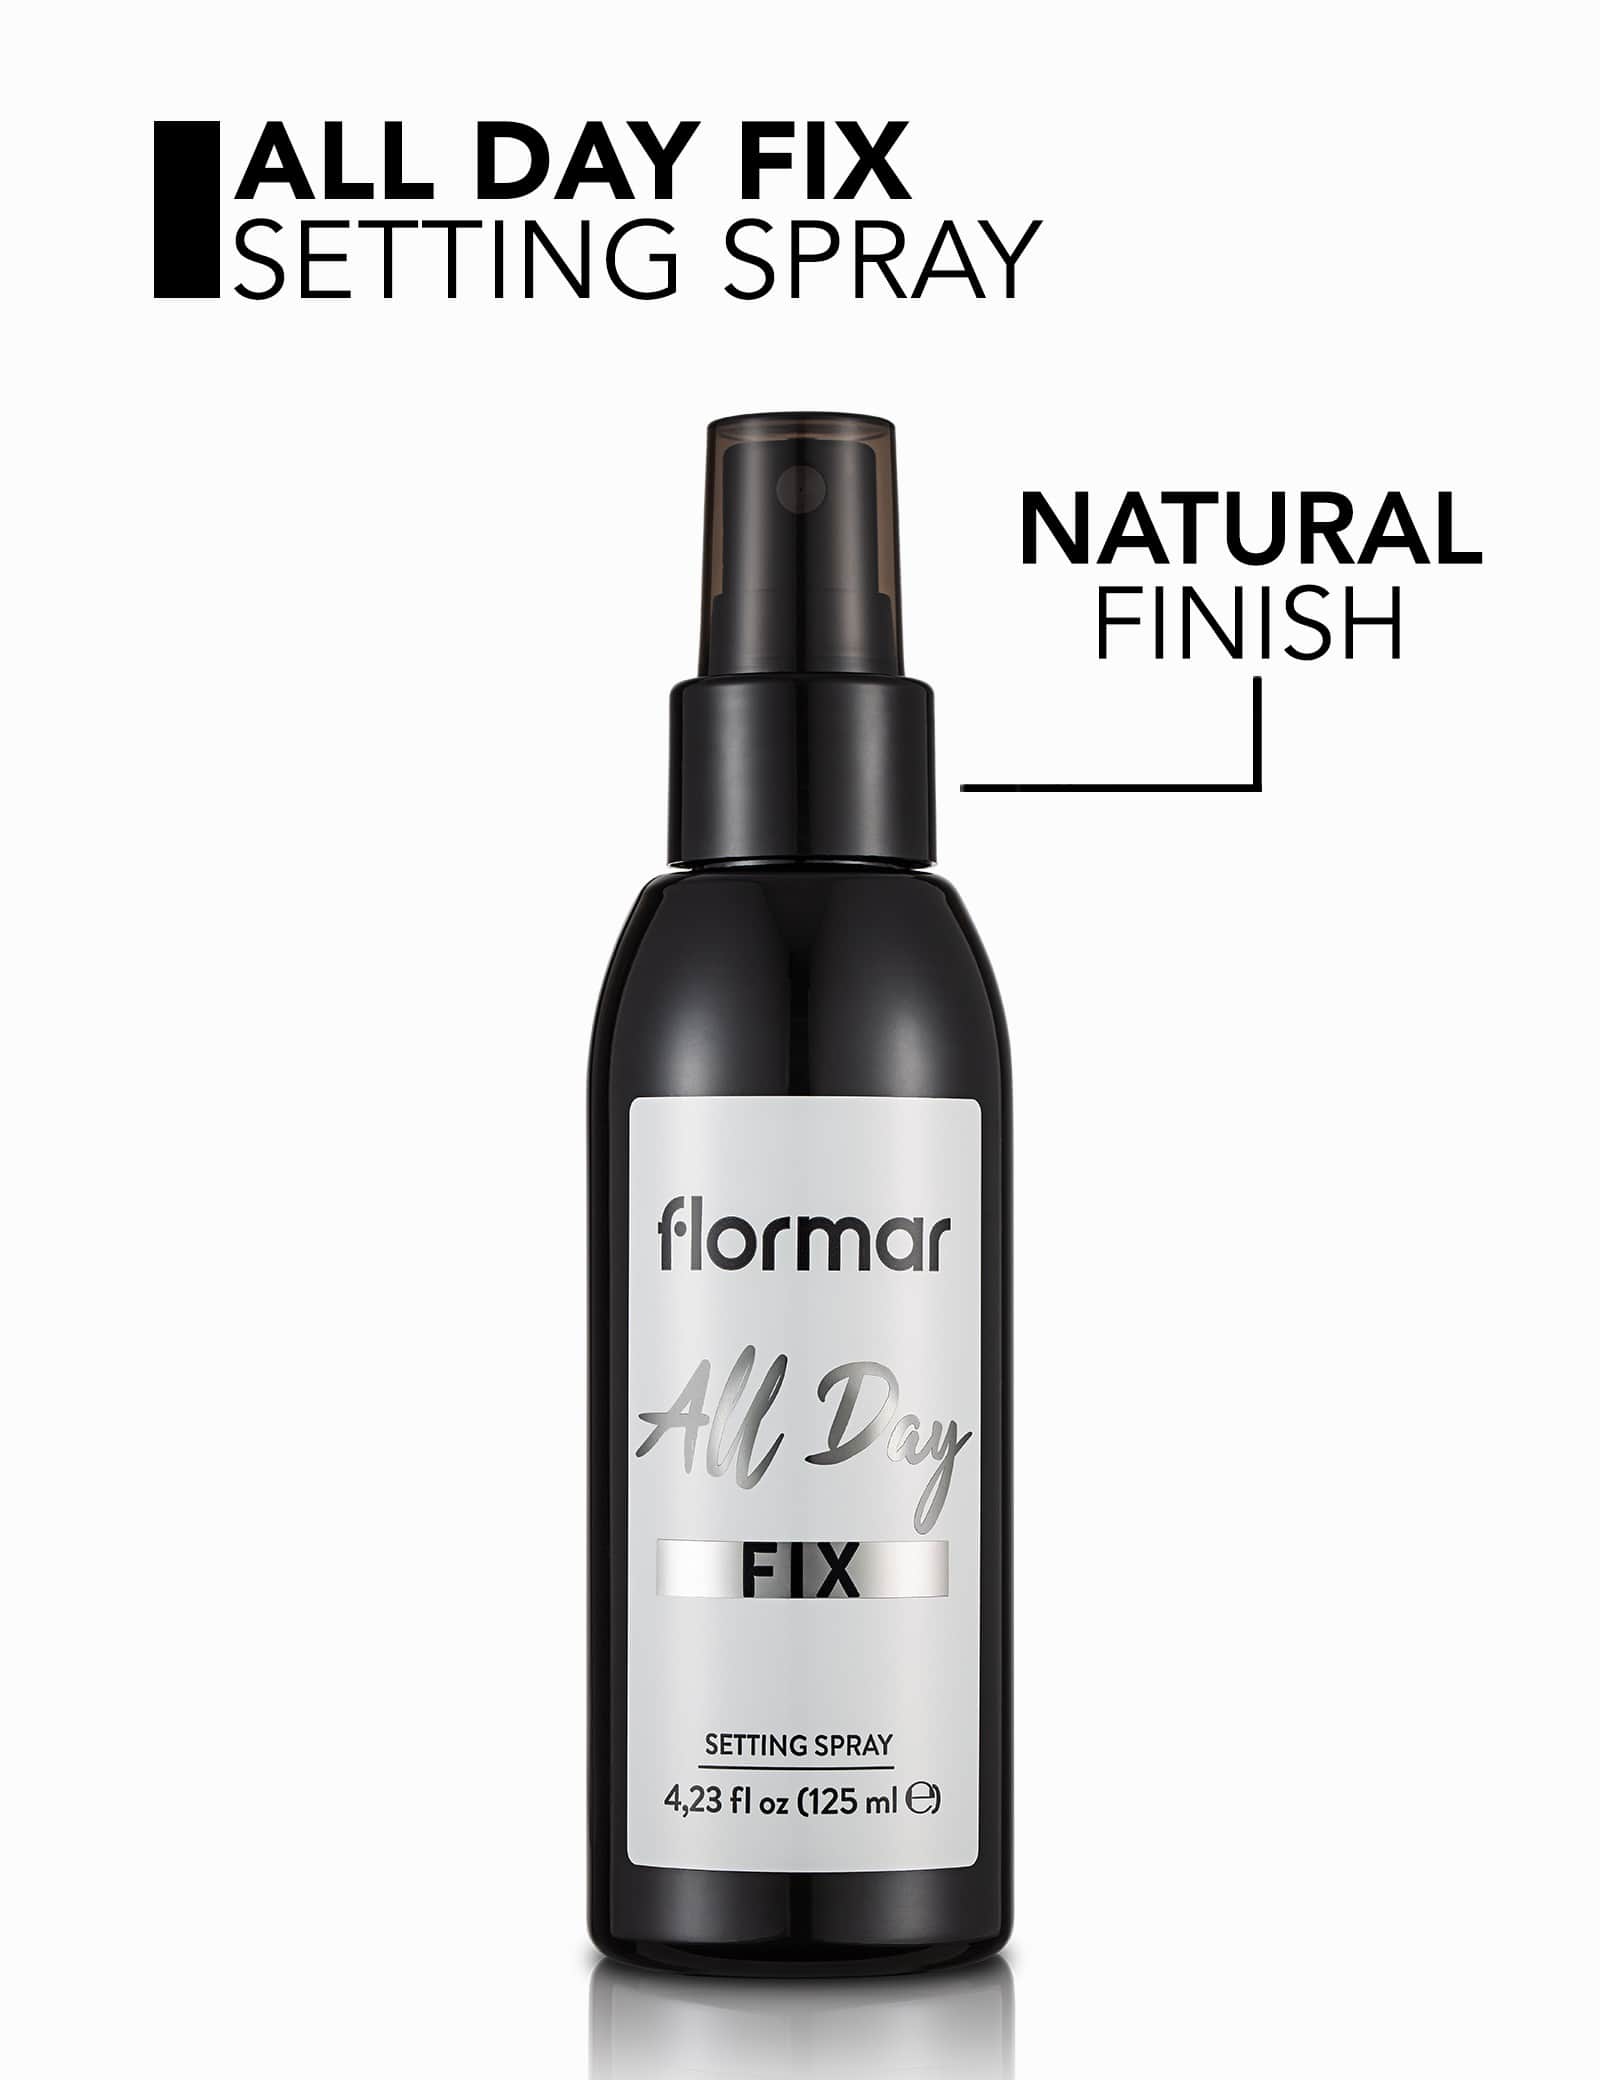 Flormar All Day Fix Setting Spray